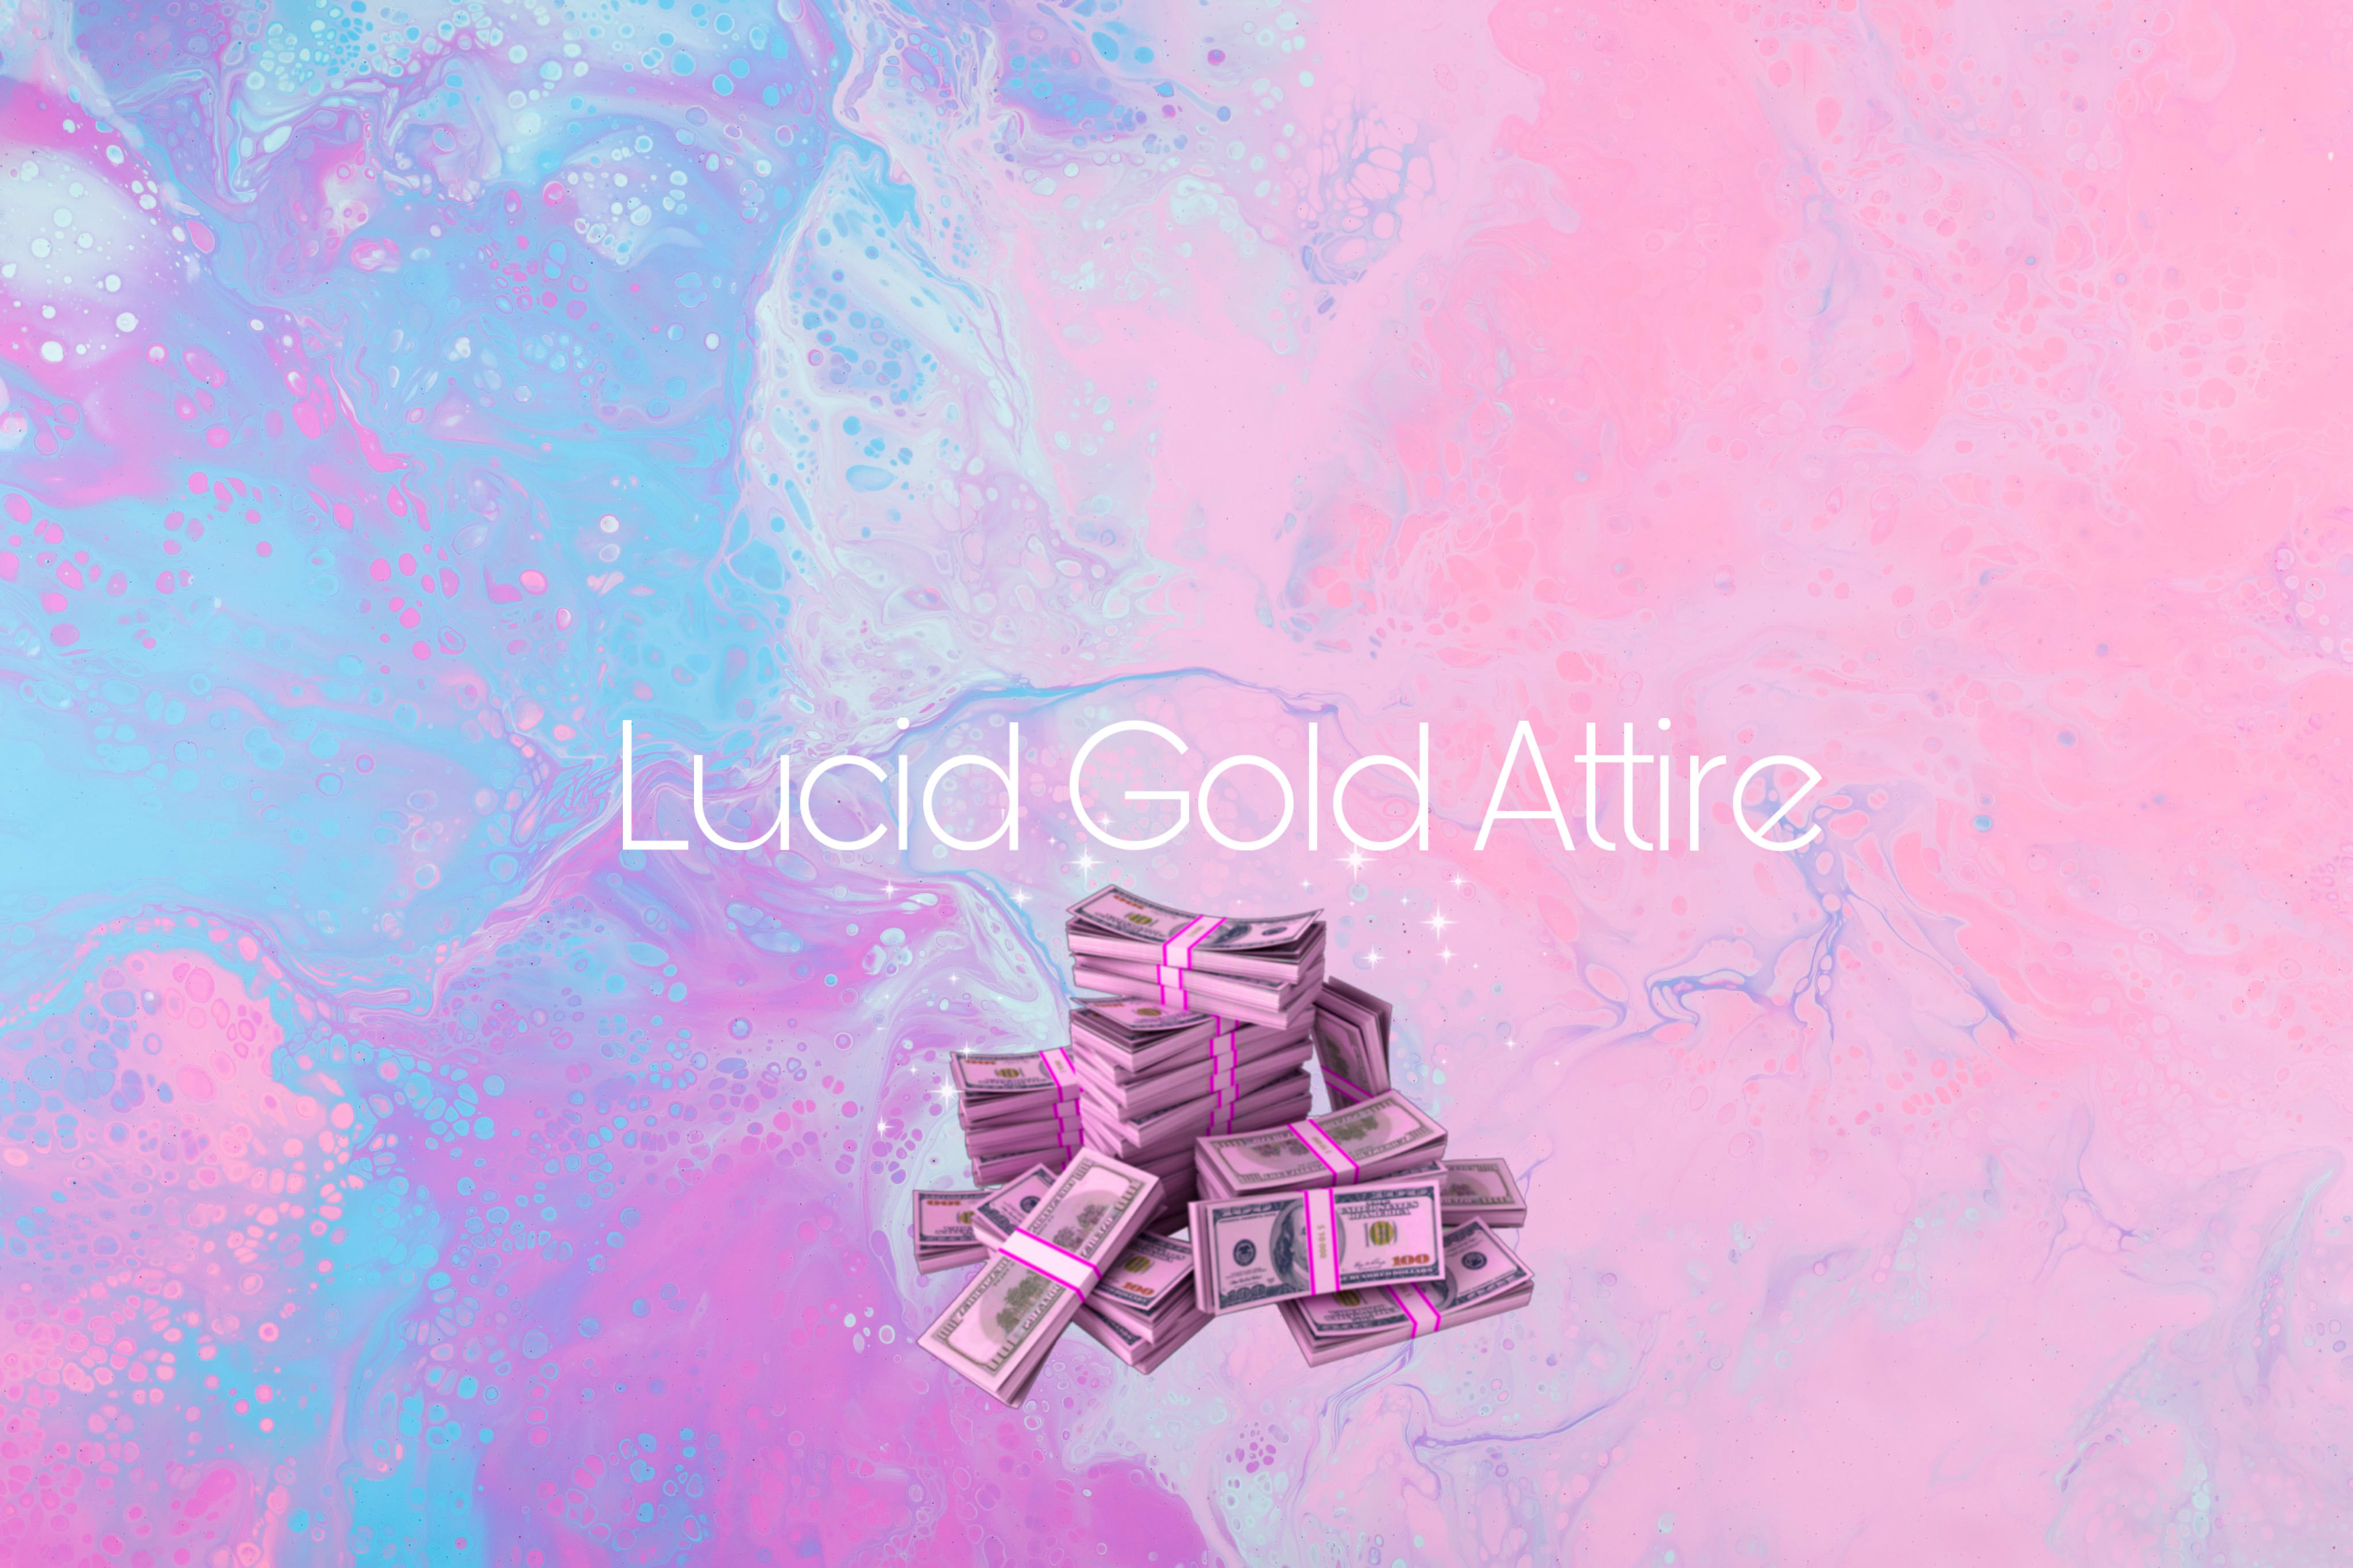 Lucid Gold Attire